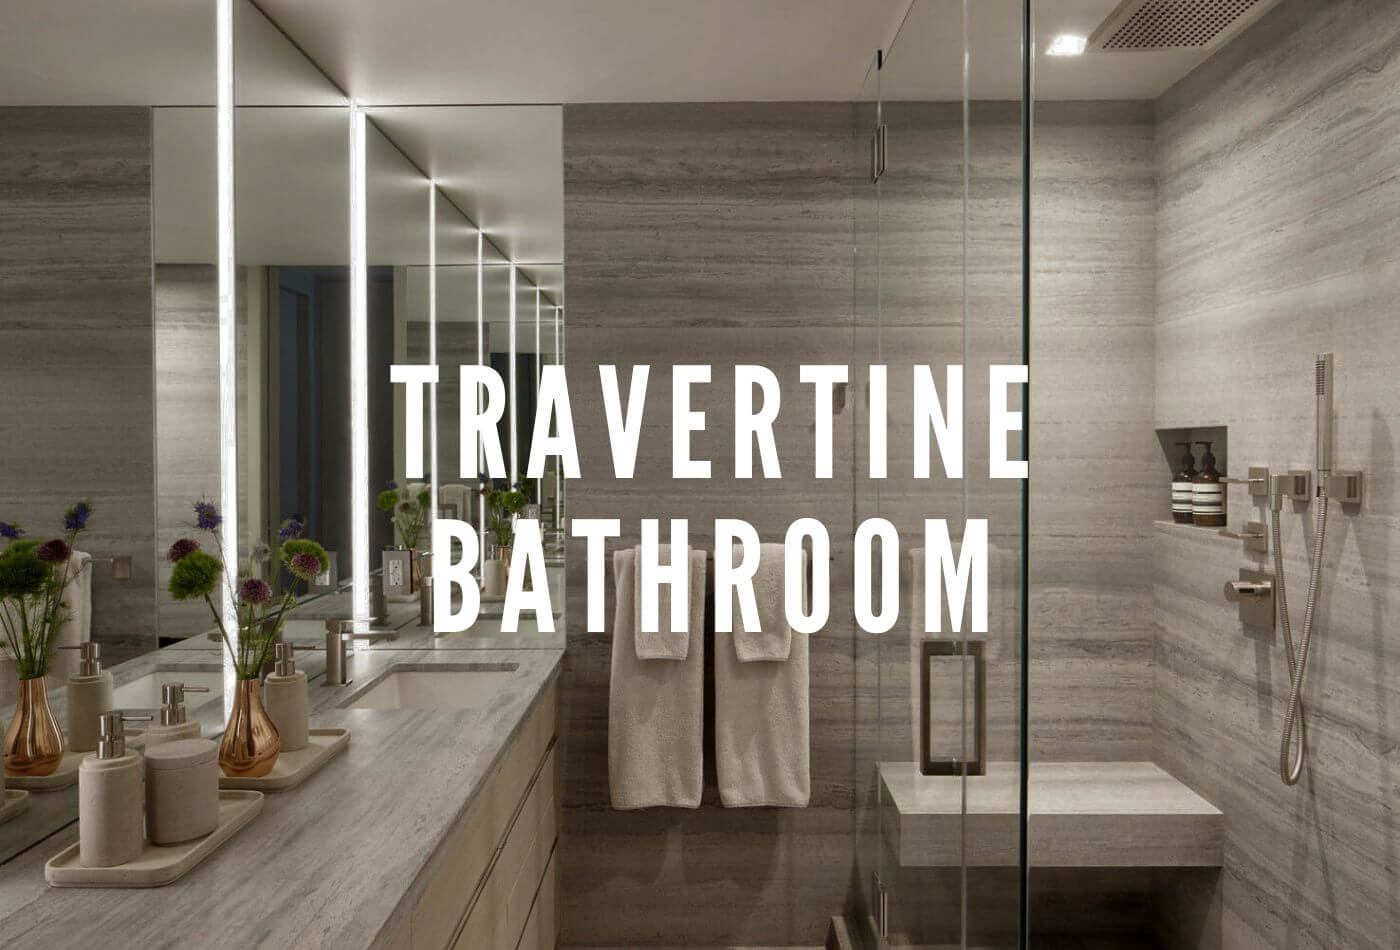 Travertine Bathroom & Shower Rooms for Boho Vibes!